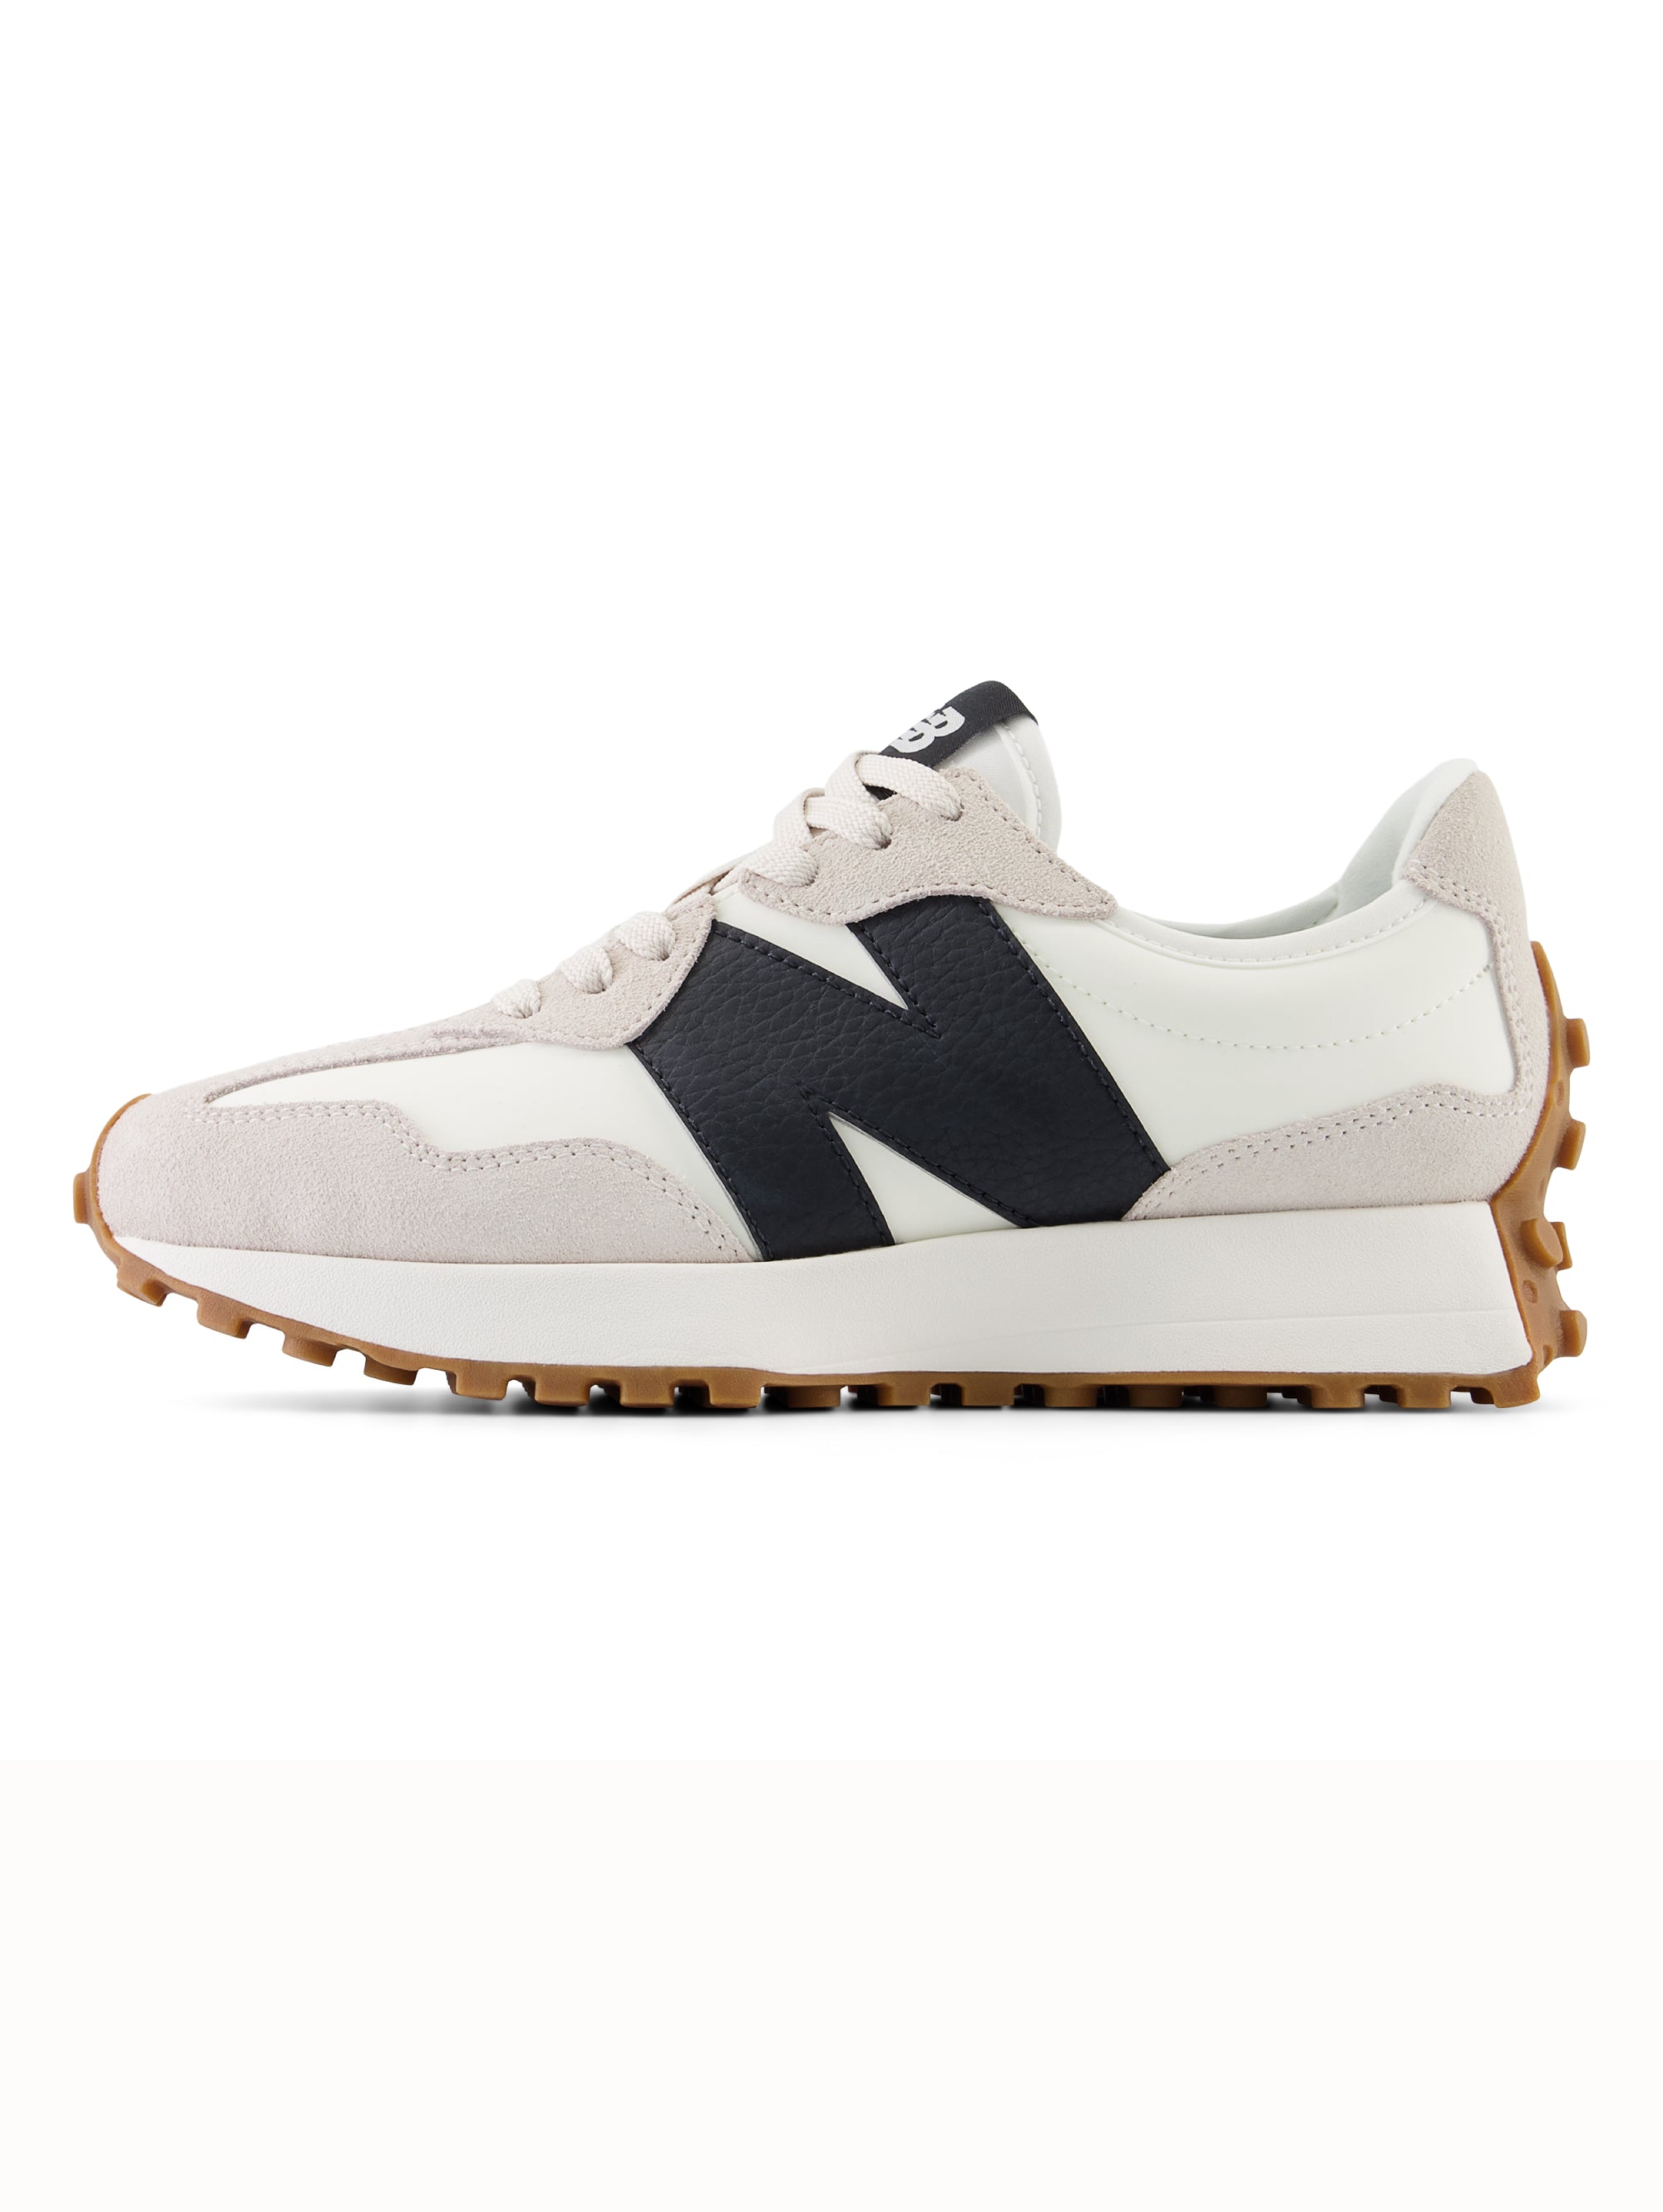 NEW BALANCE-Sneakers Retrò 327 in Pelle Bianco/Nero-TRYME Shop